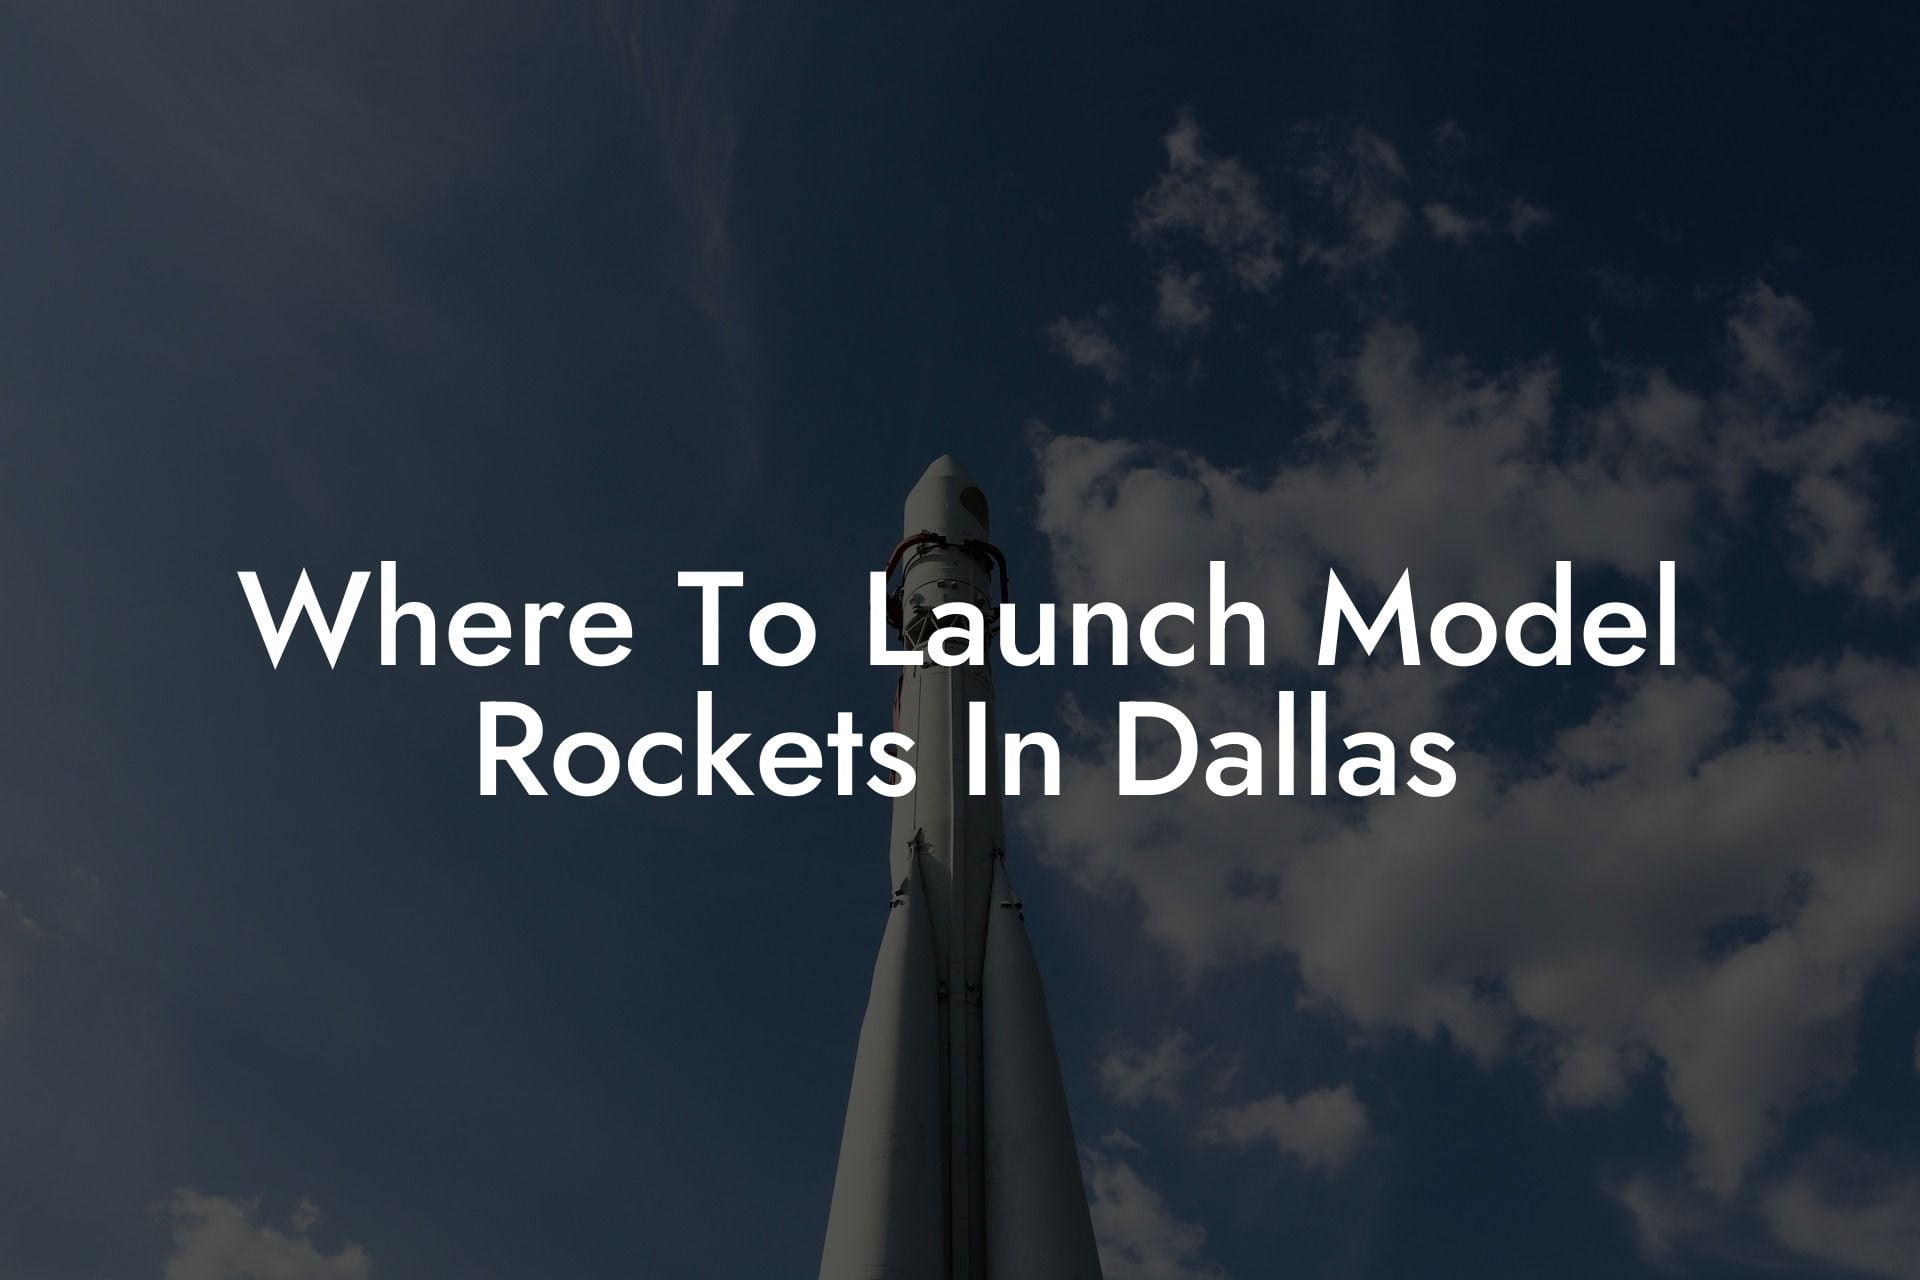 Where To Launch Model Rockets In Dallas